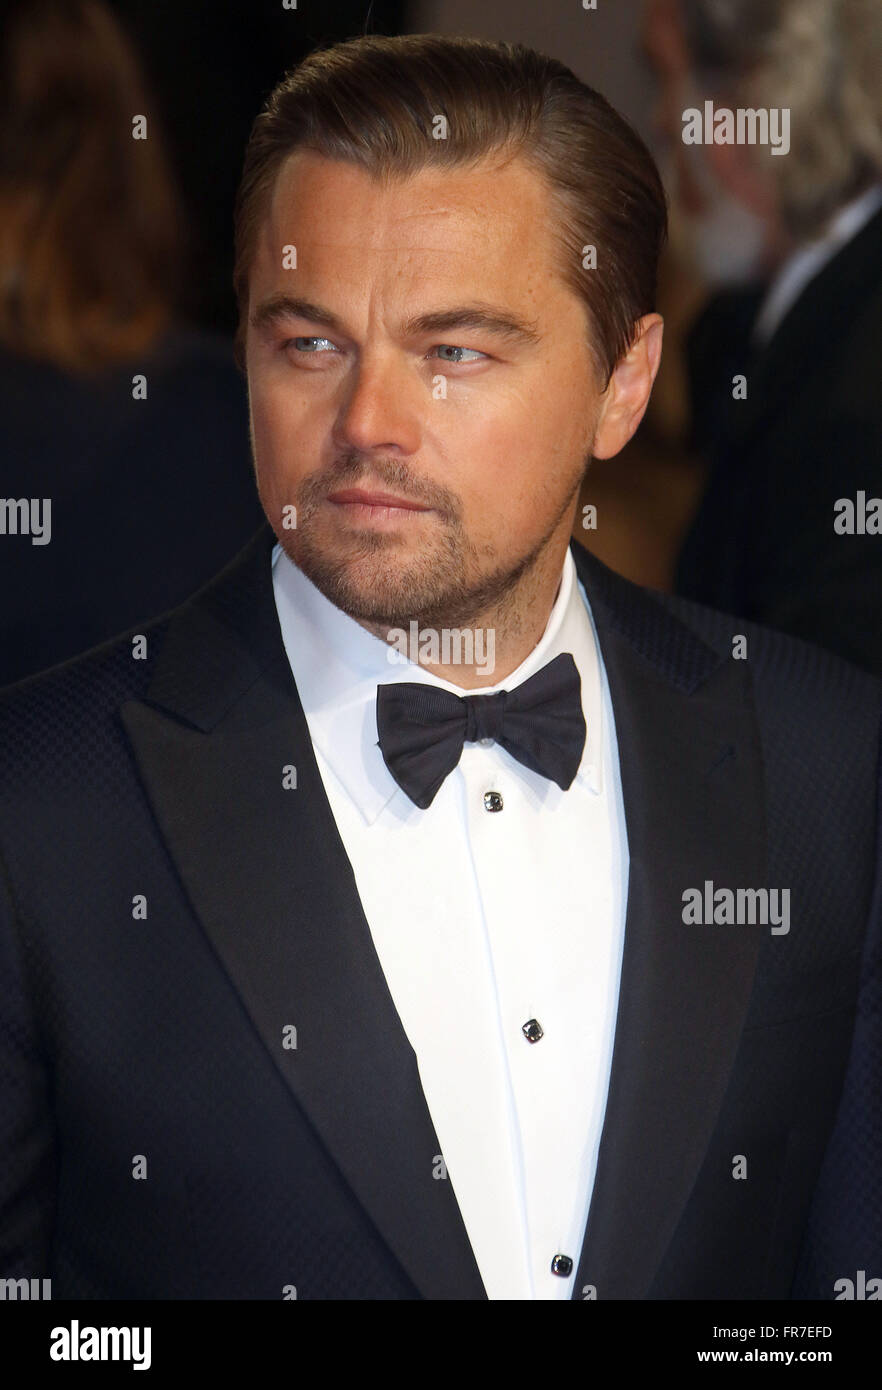 February 14, 2016 - Leonardo DiCaprio attending EE British Academy Film Awards 2016 at Royal Opera House, Covent Garden in Londo Stock Photo